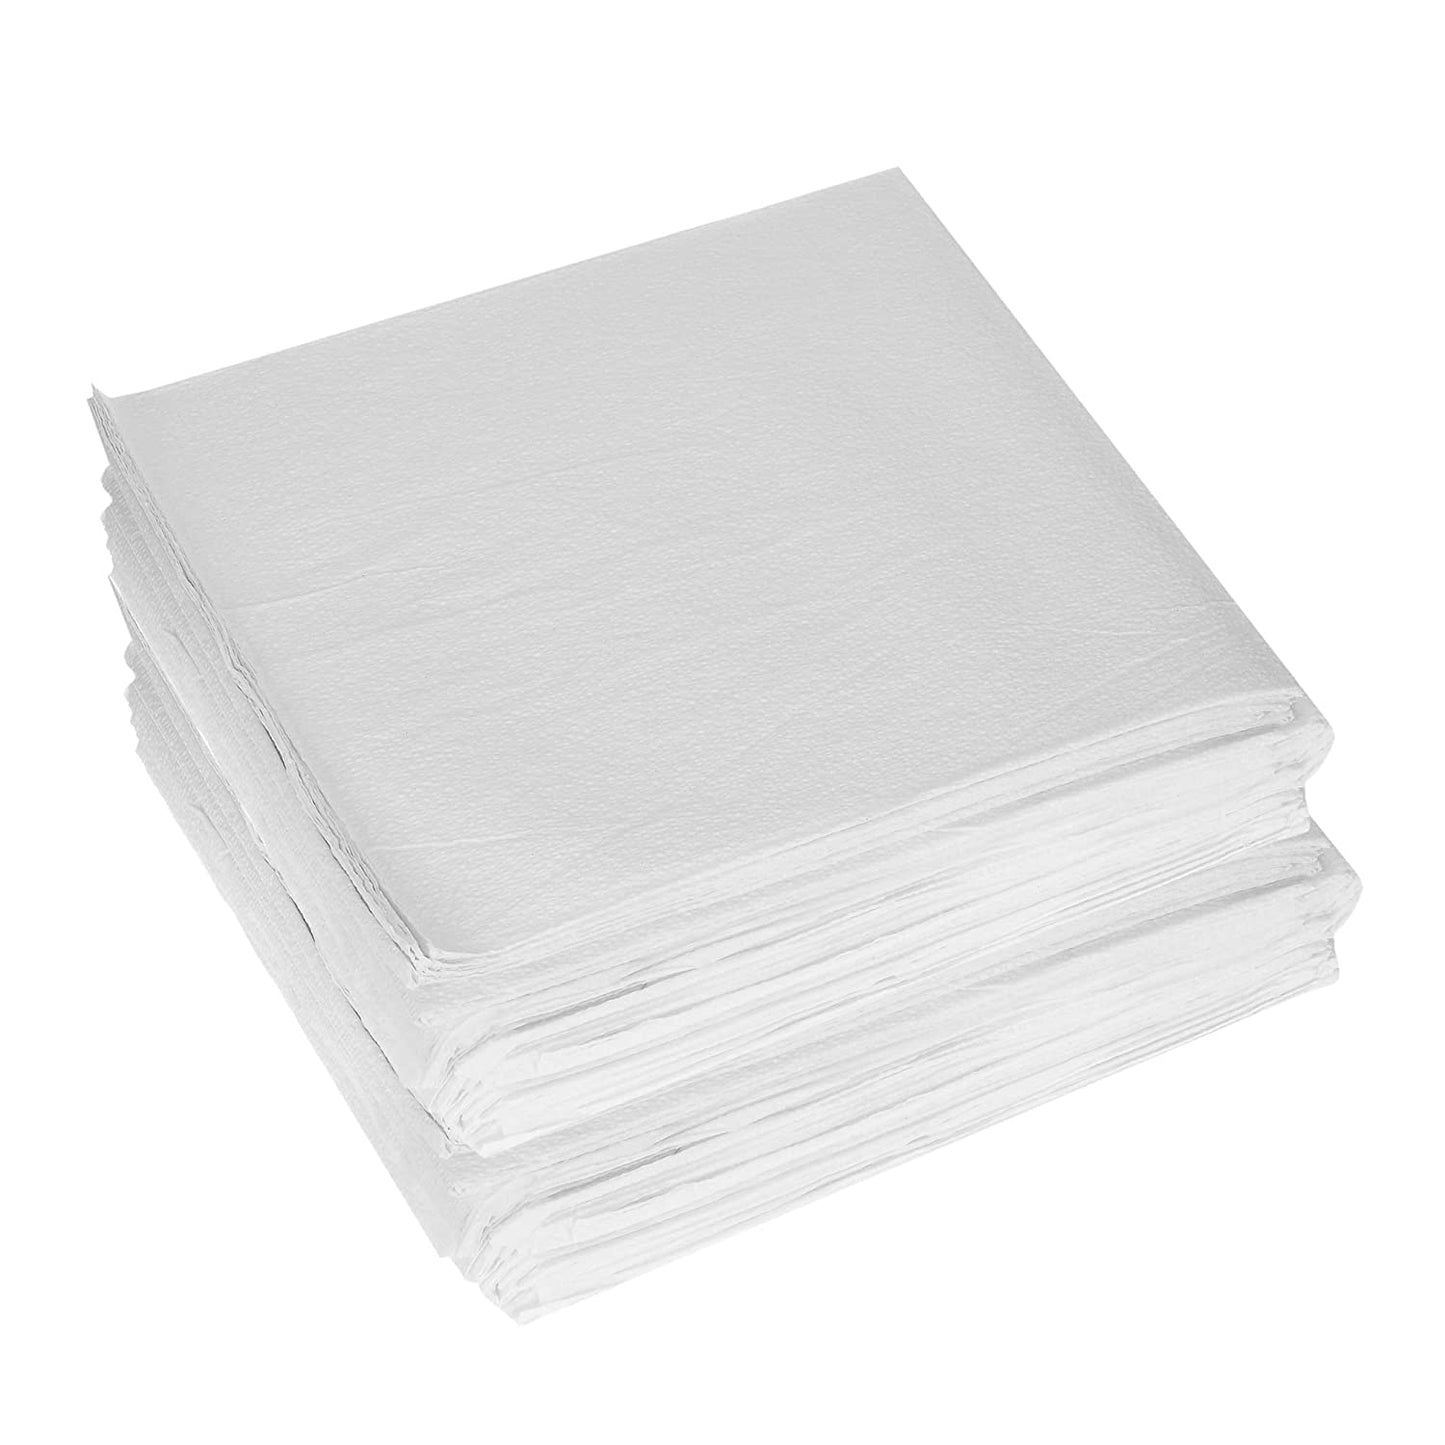 Drape Sheets 2-Ply White